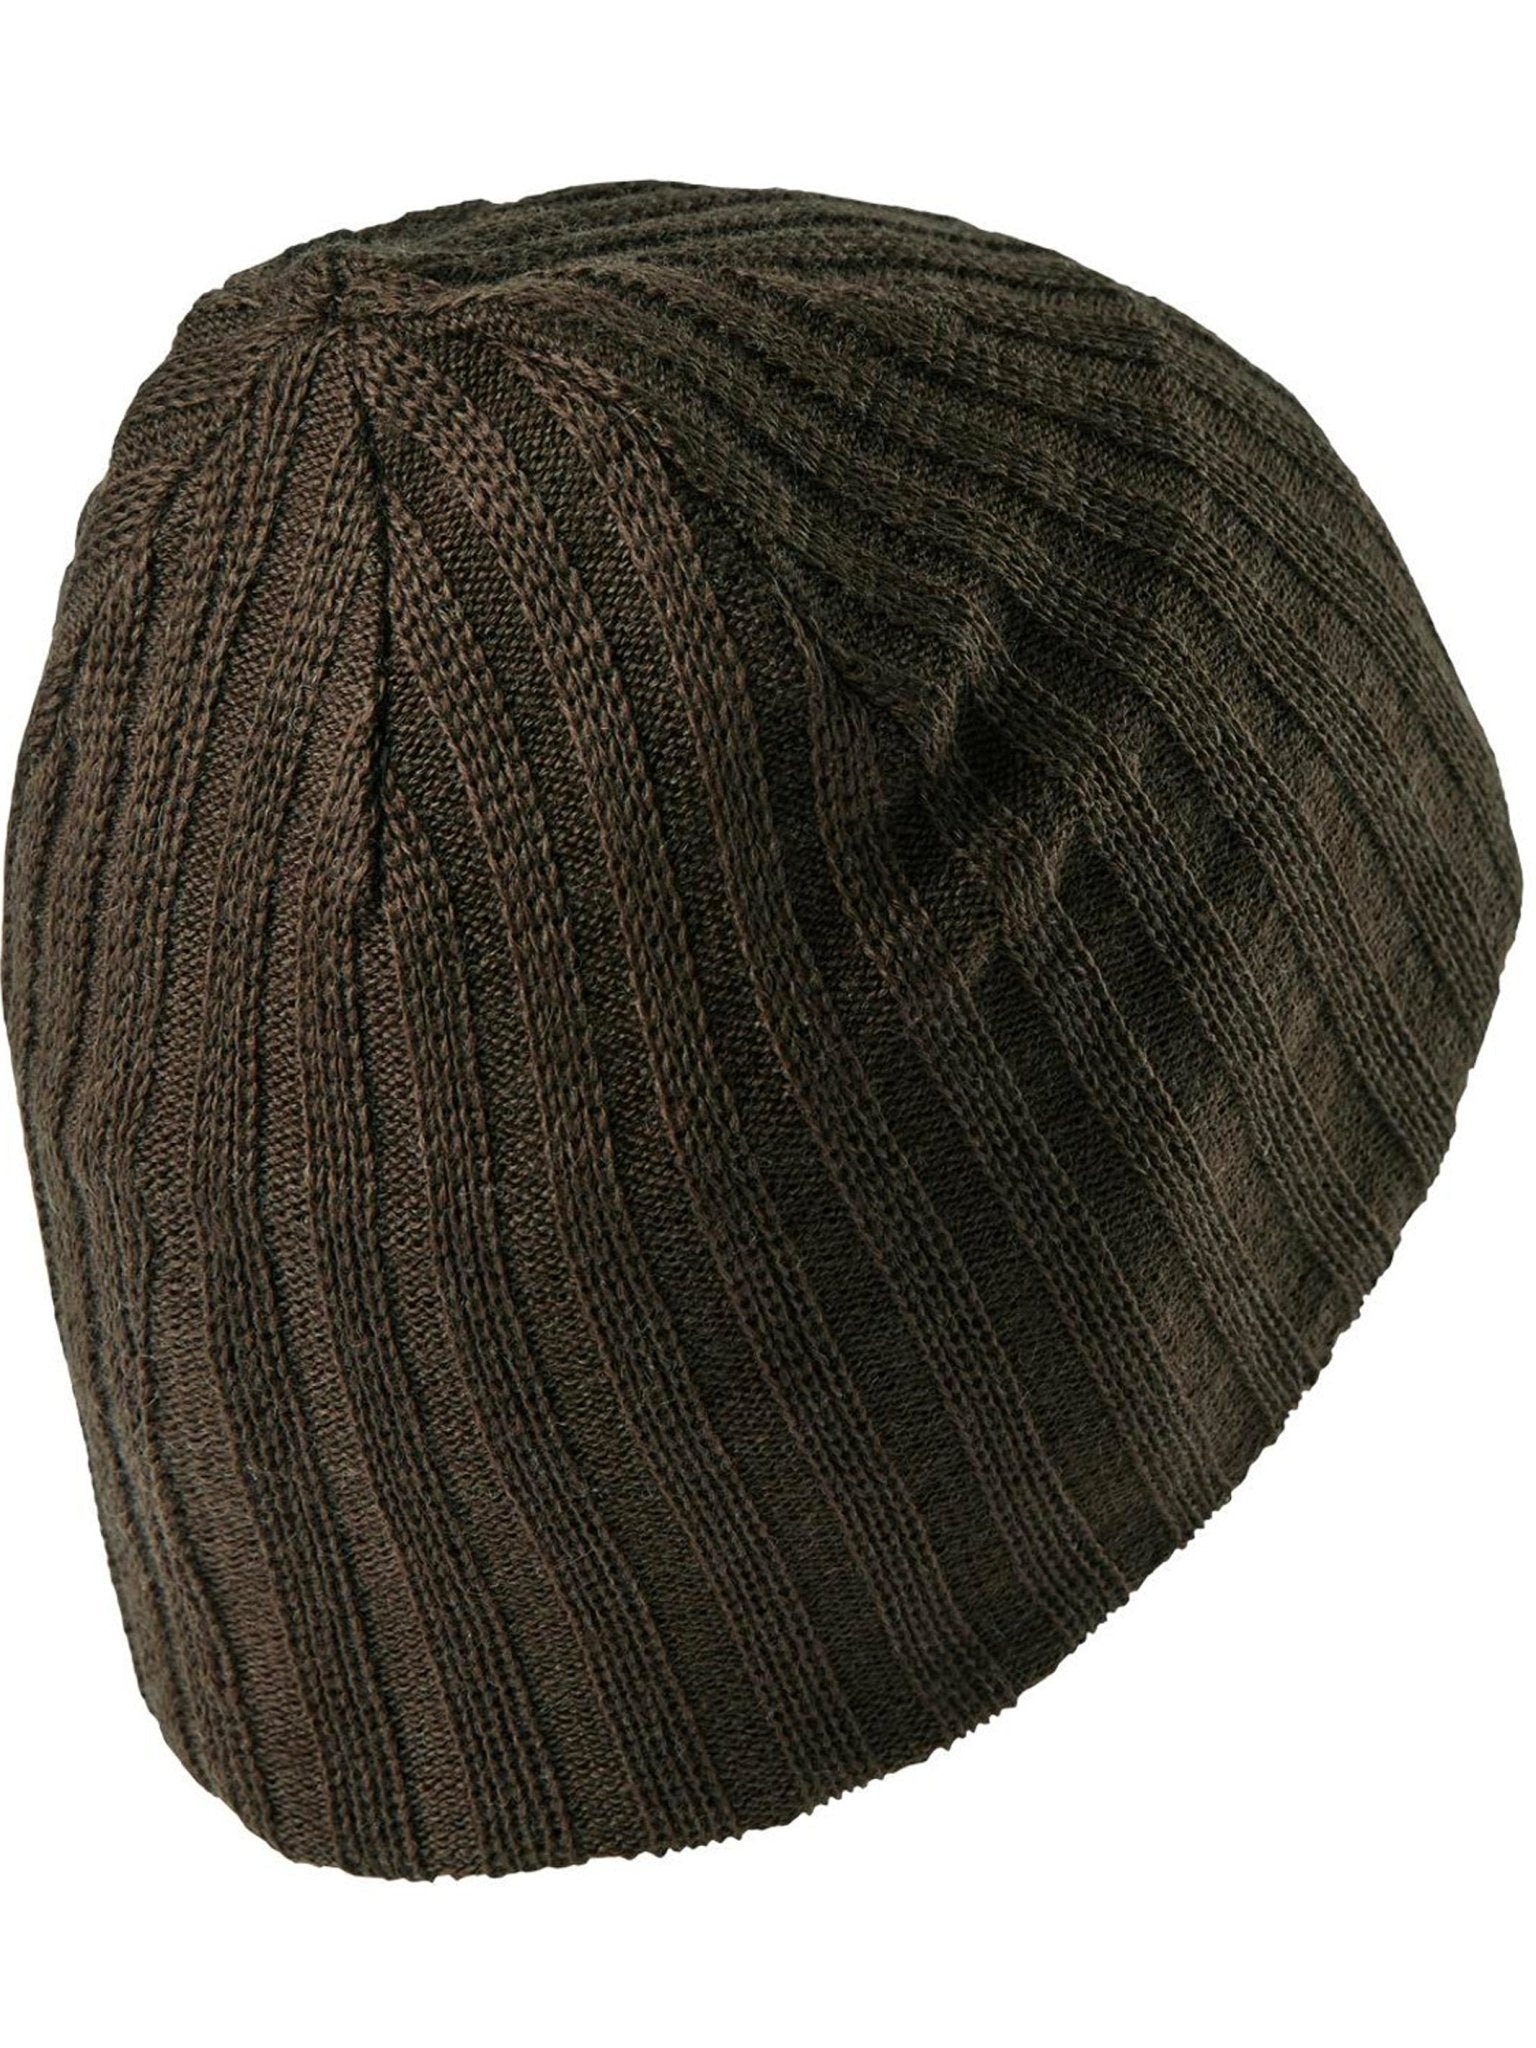 4elementsclothingDeerhunterDeerhunter - Recon Knitted Beanie / Hat with 3M™ Thinsulate™Hats6749-385